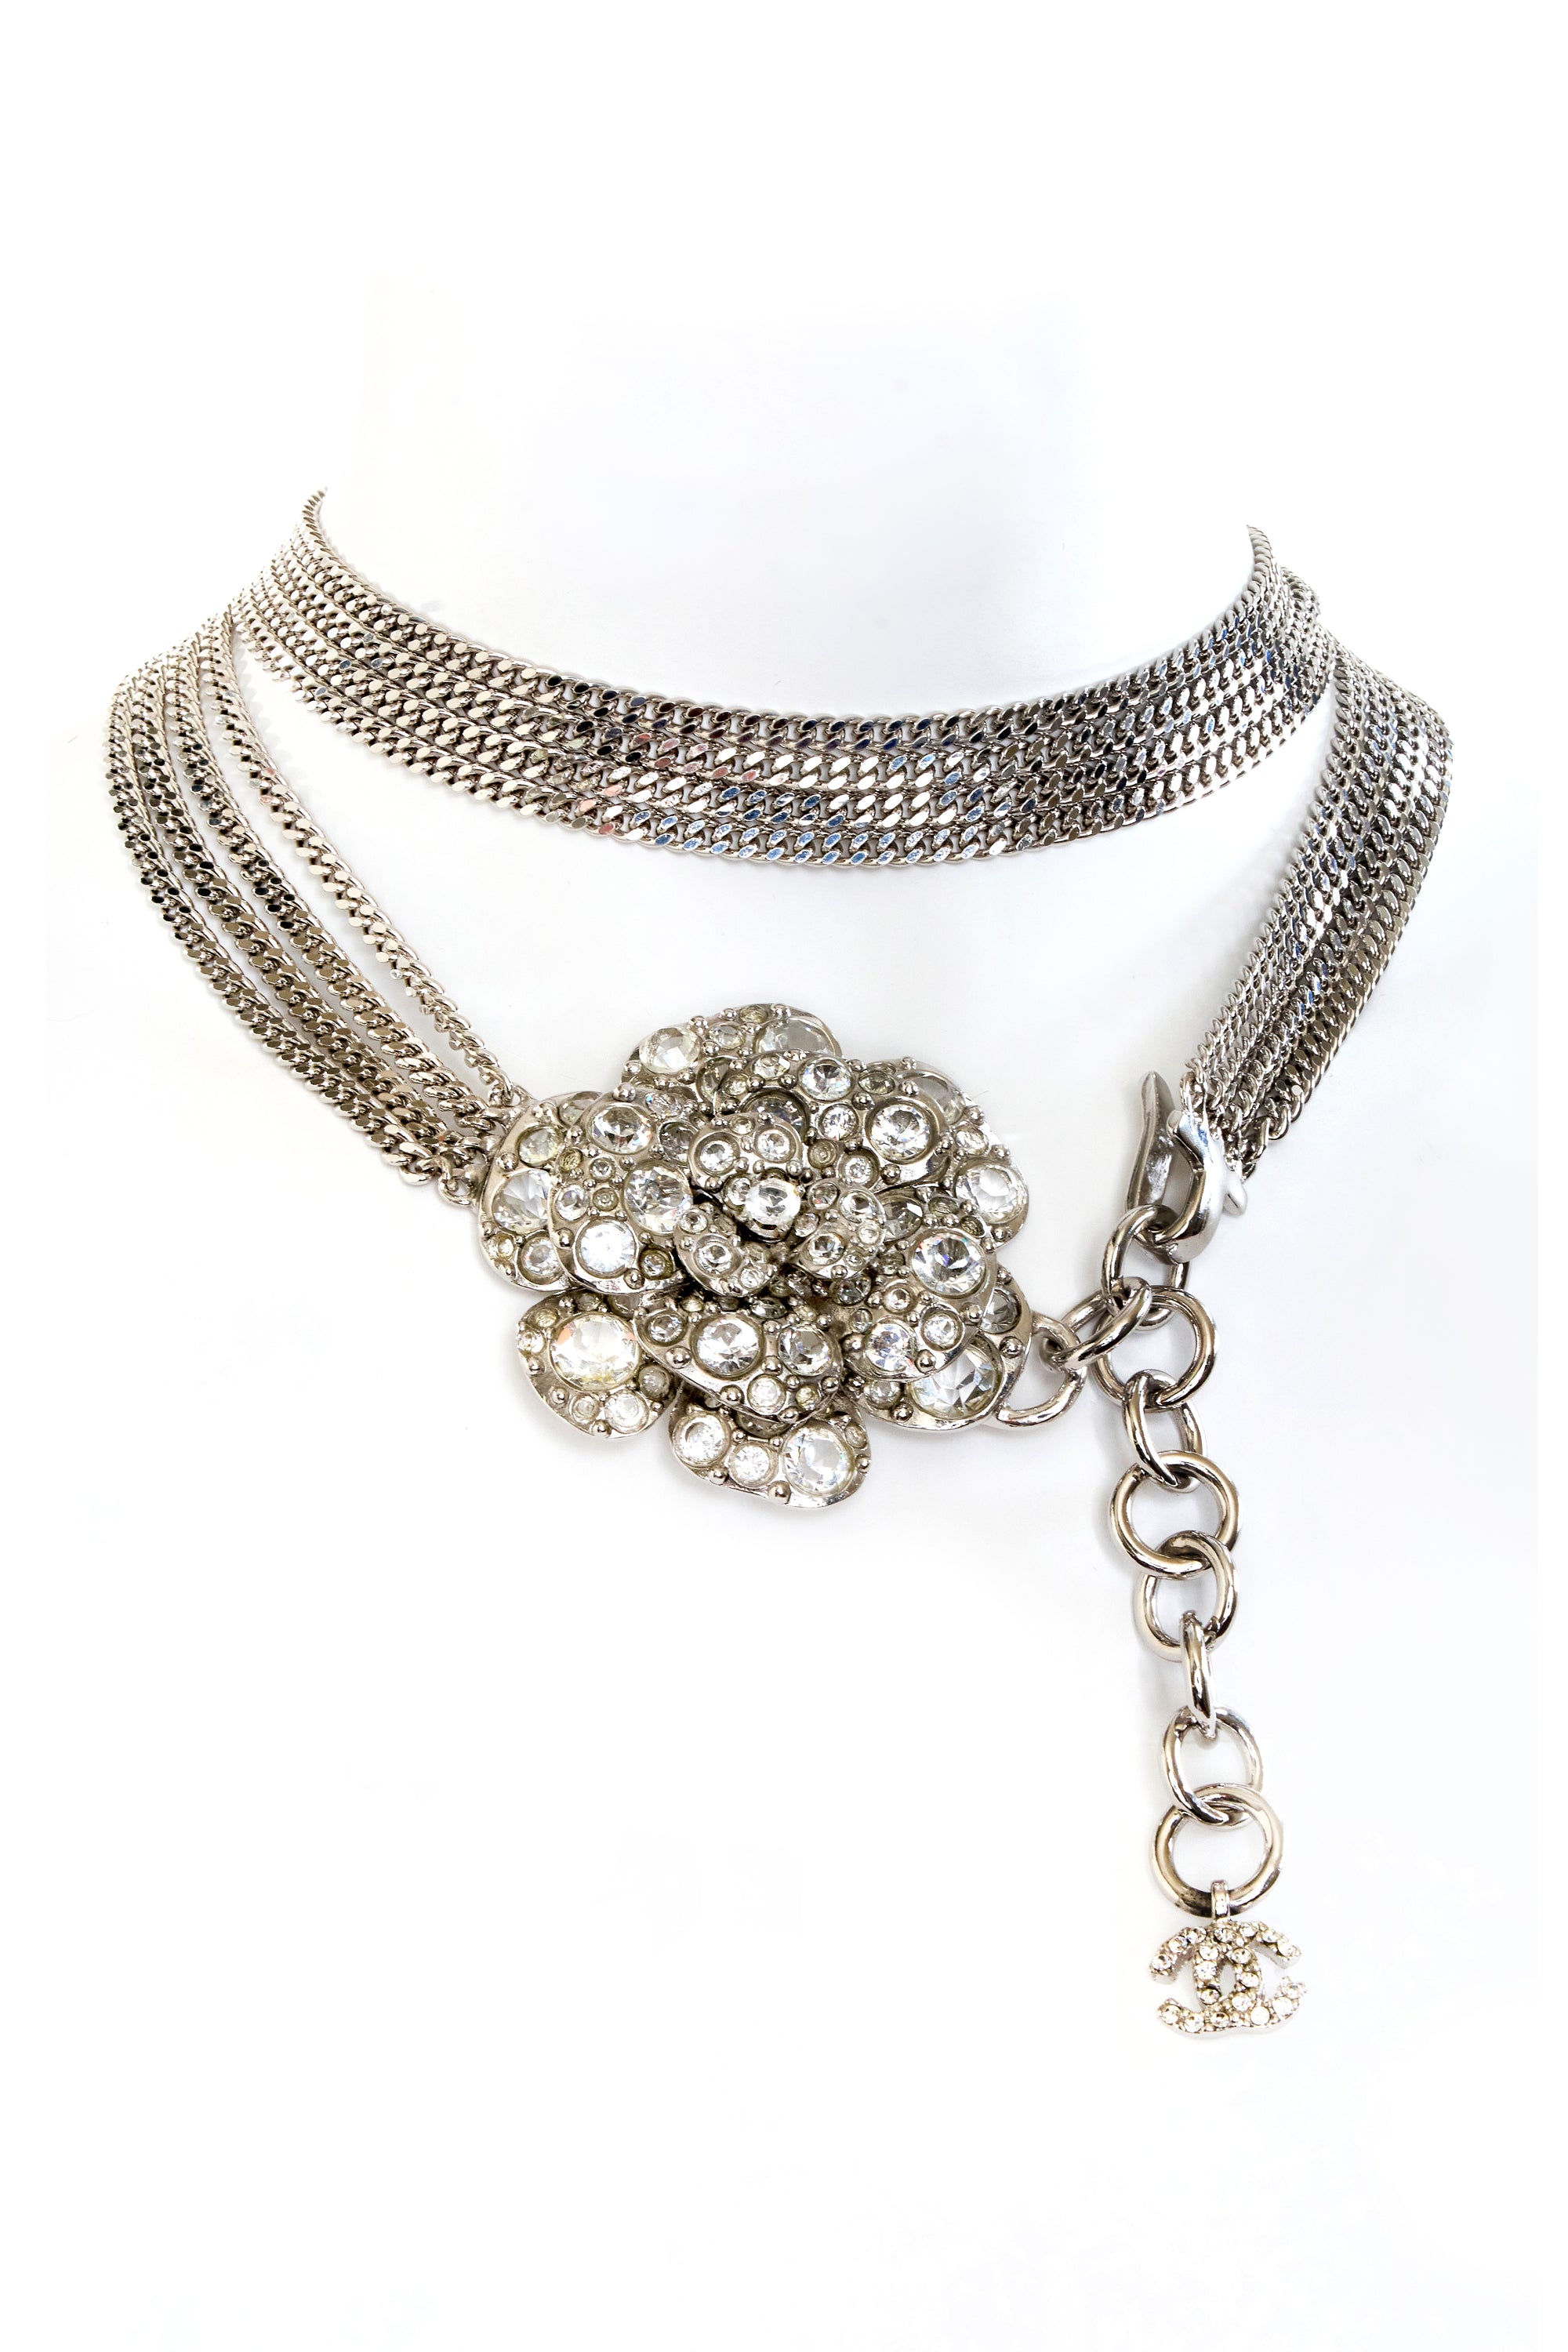 Chanel Camellia Crystal Strass Chain Belt/Necklace 2005V